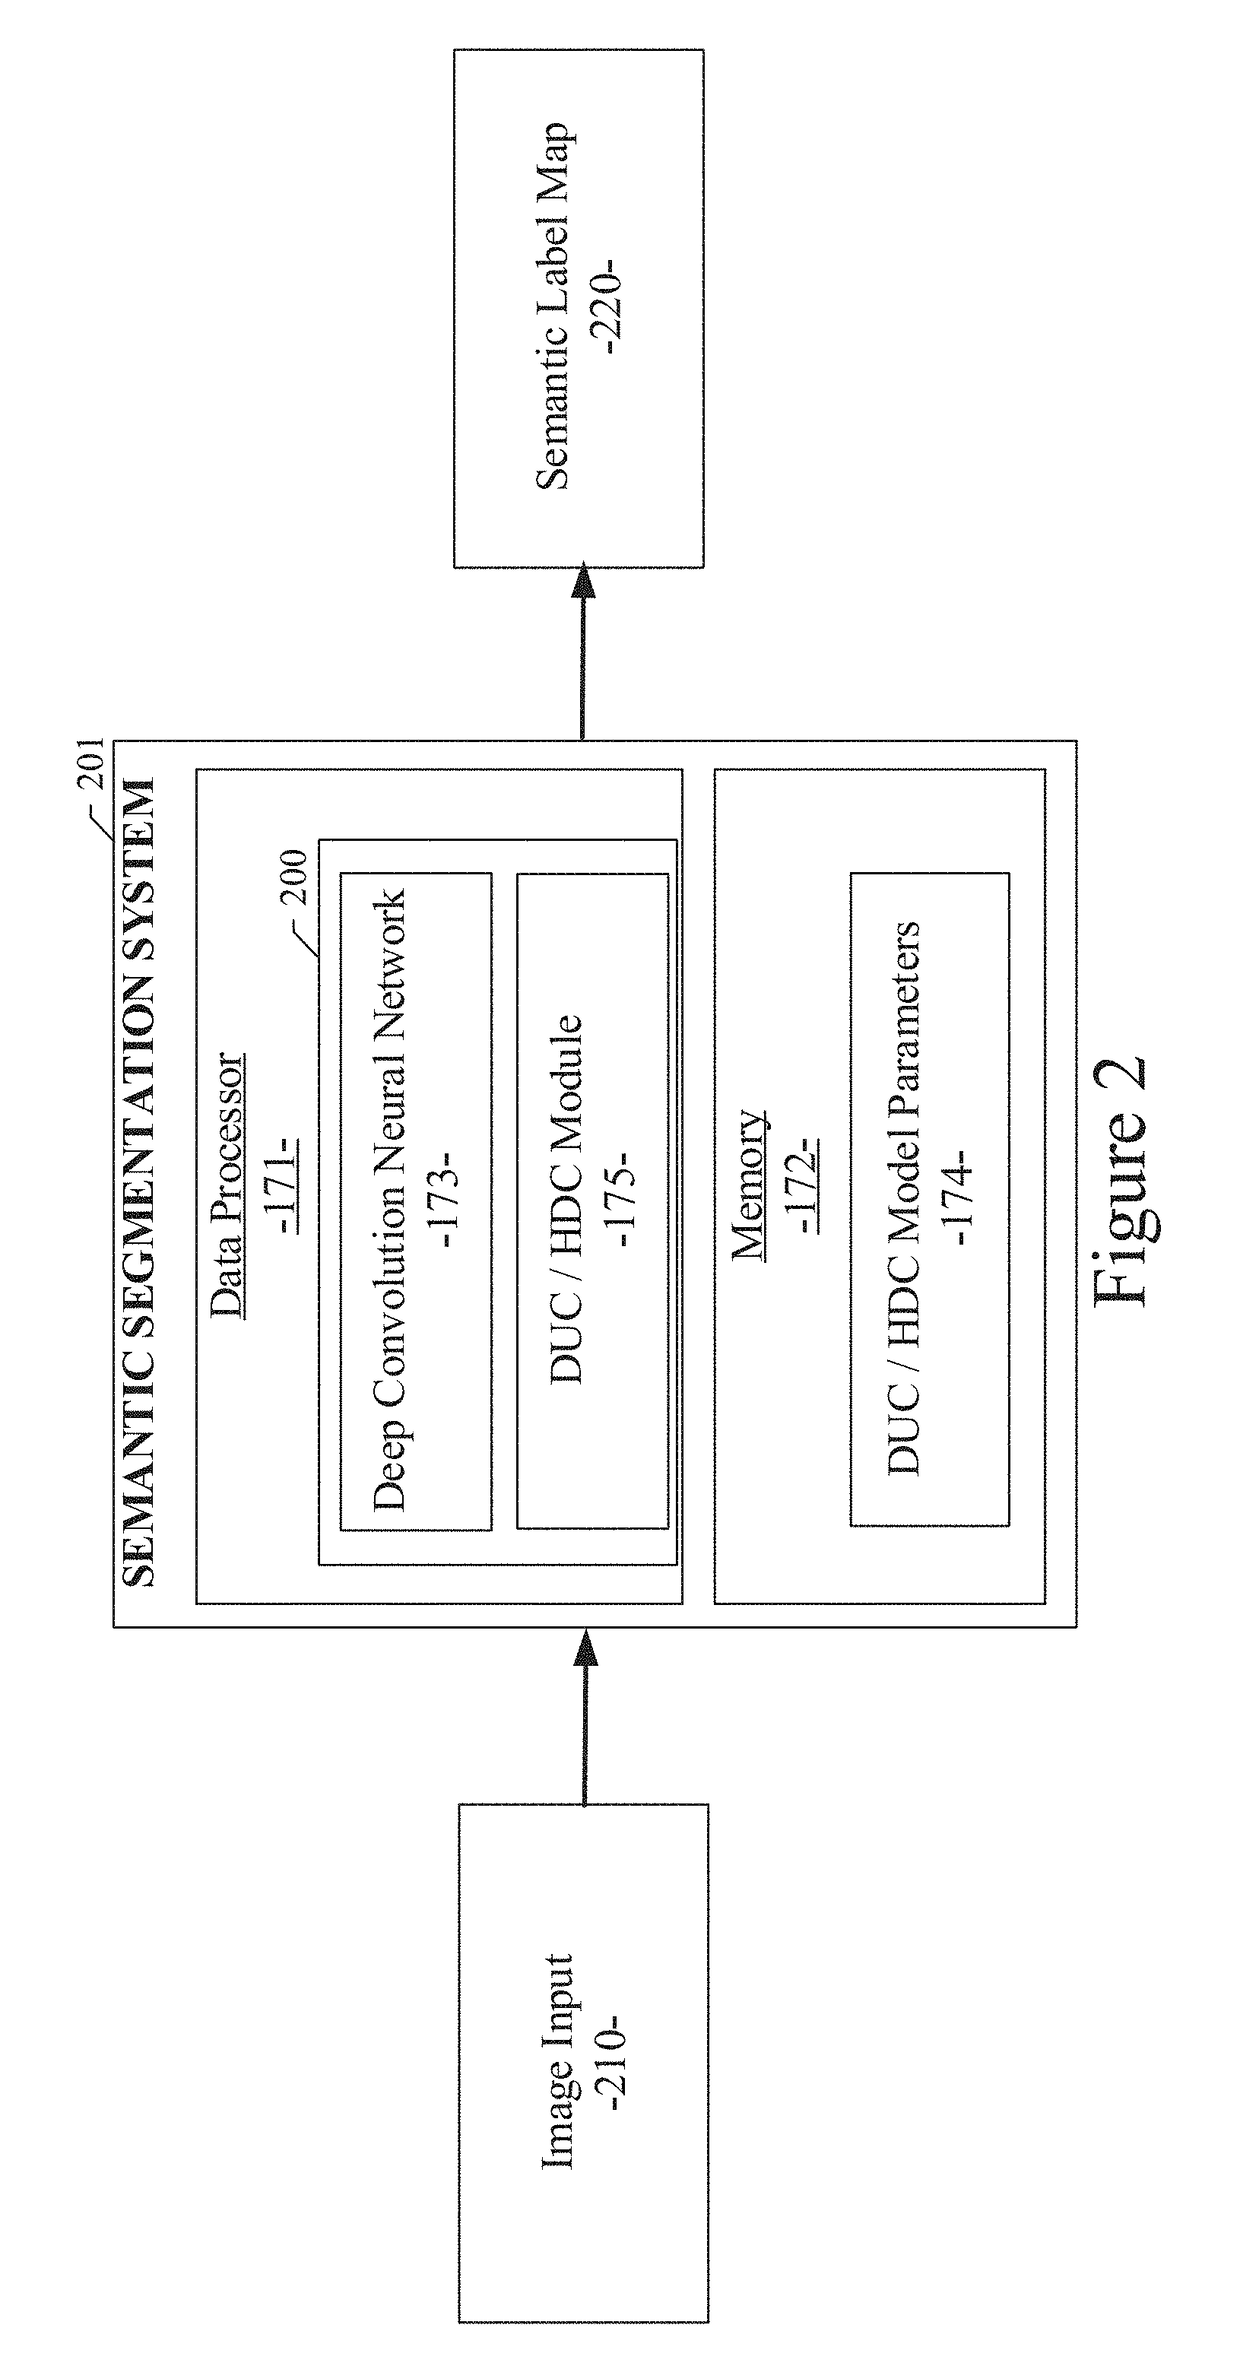 System and method for semantic segmentation using hybrid dilated convolution (HDC)